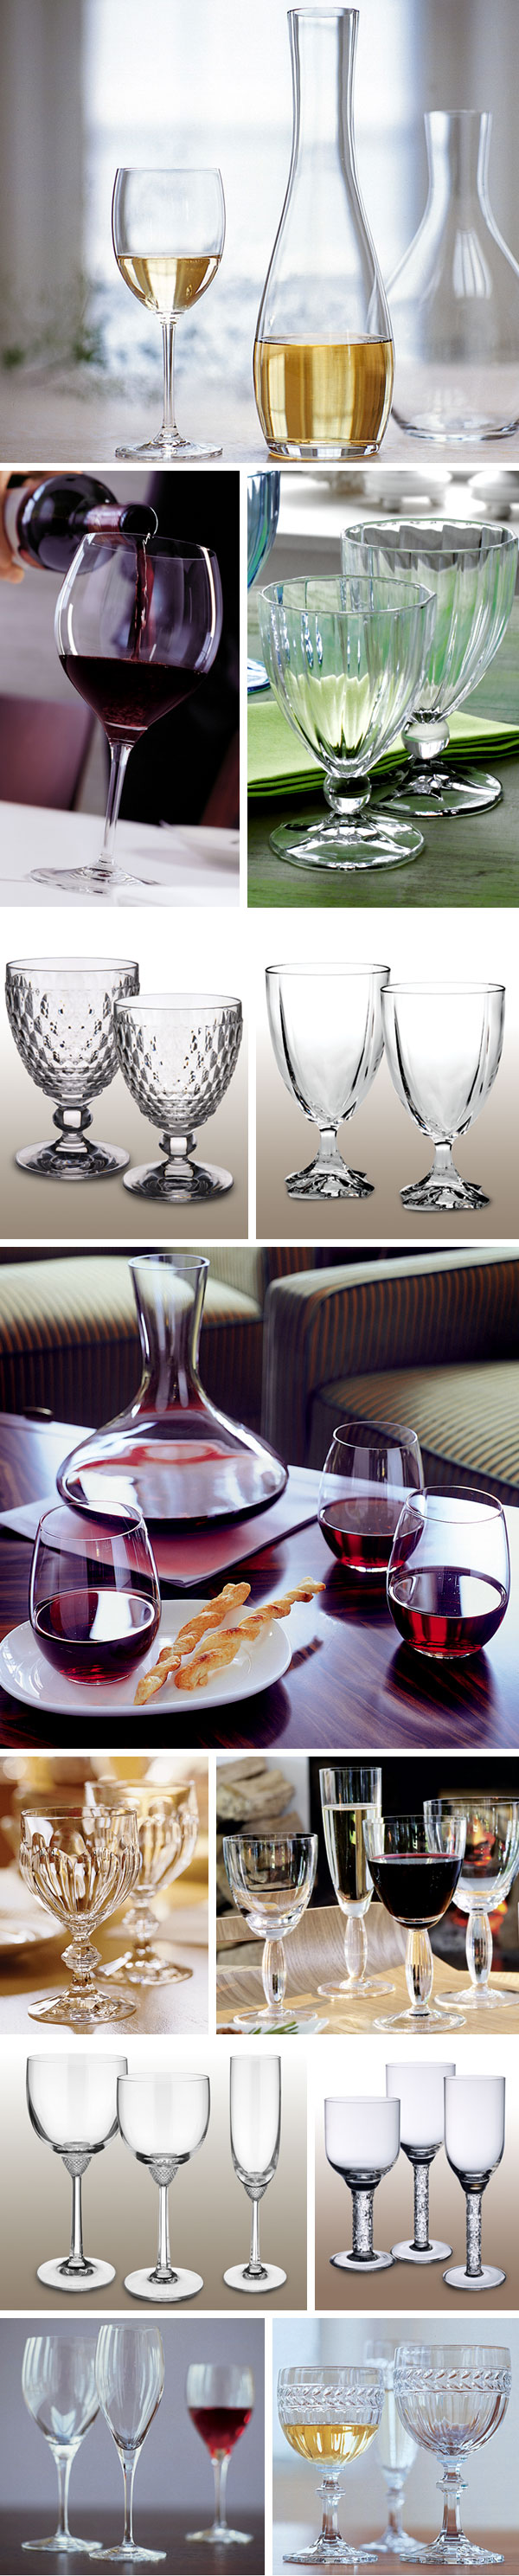 Villeroy & Boch Wineglasses